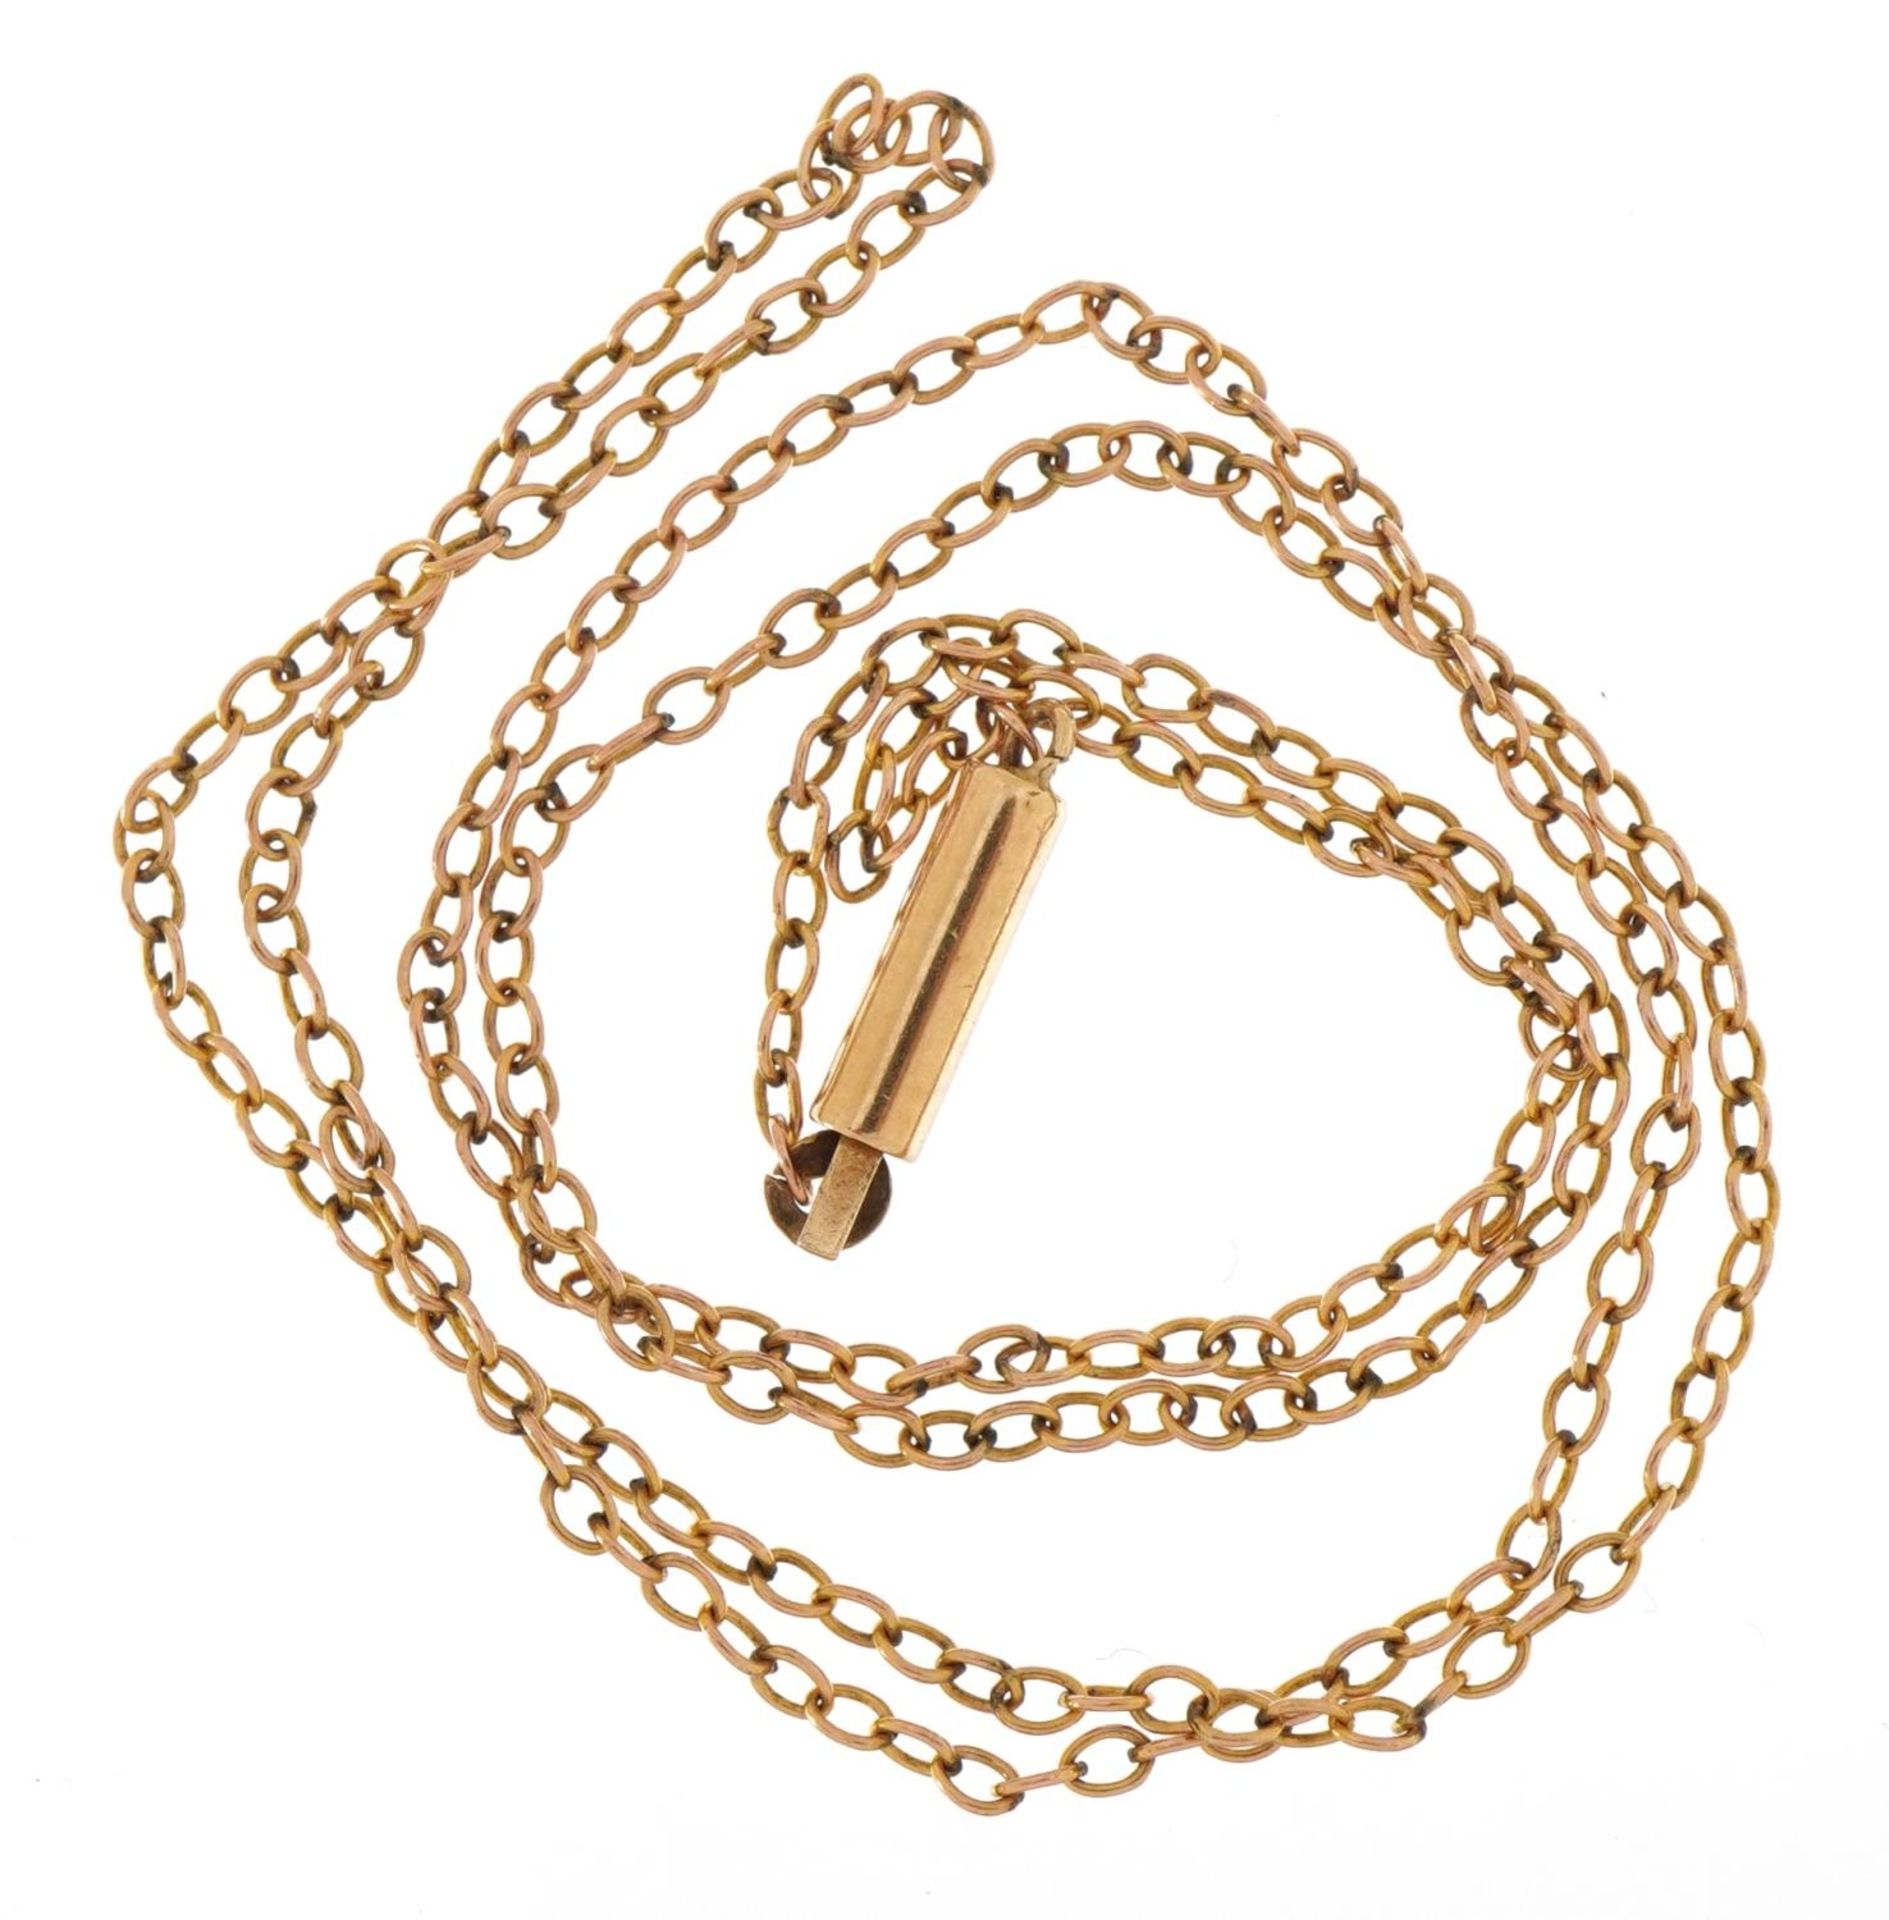 9ct gold Belcher link necklace, 41cm in length, 1.5g - Image 2 of 3